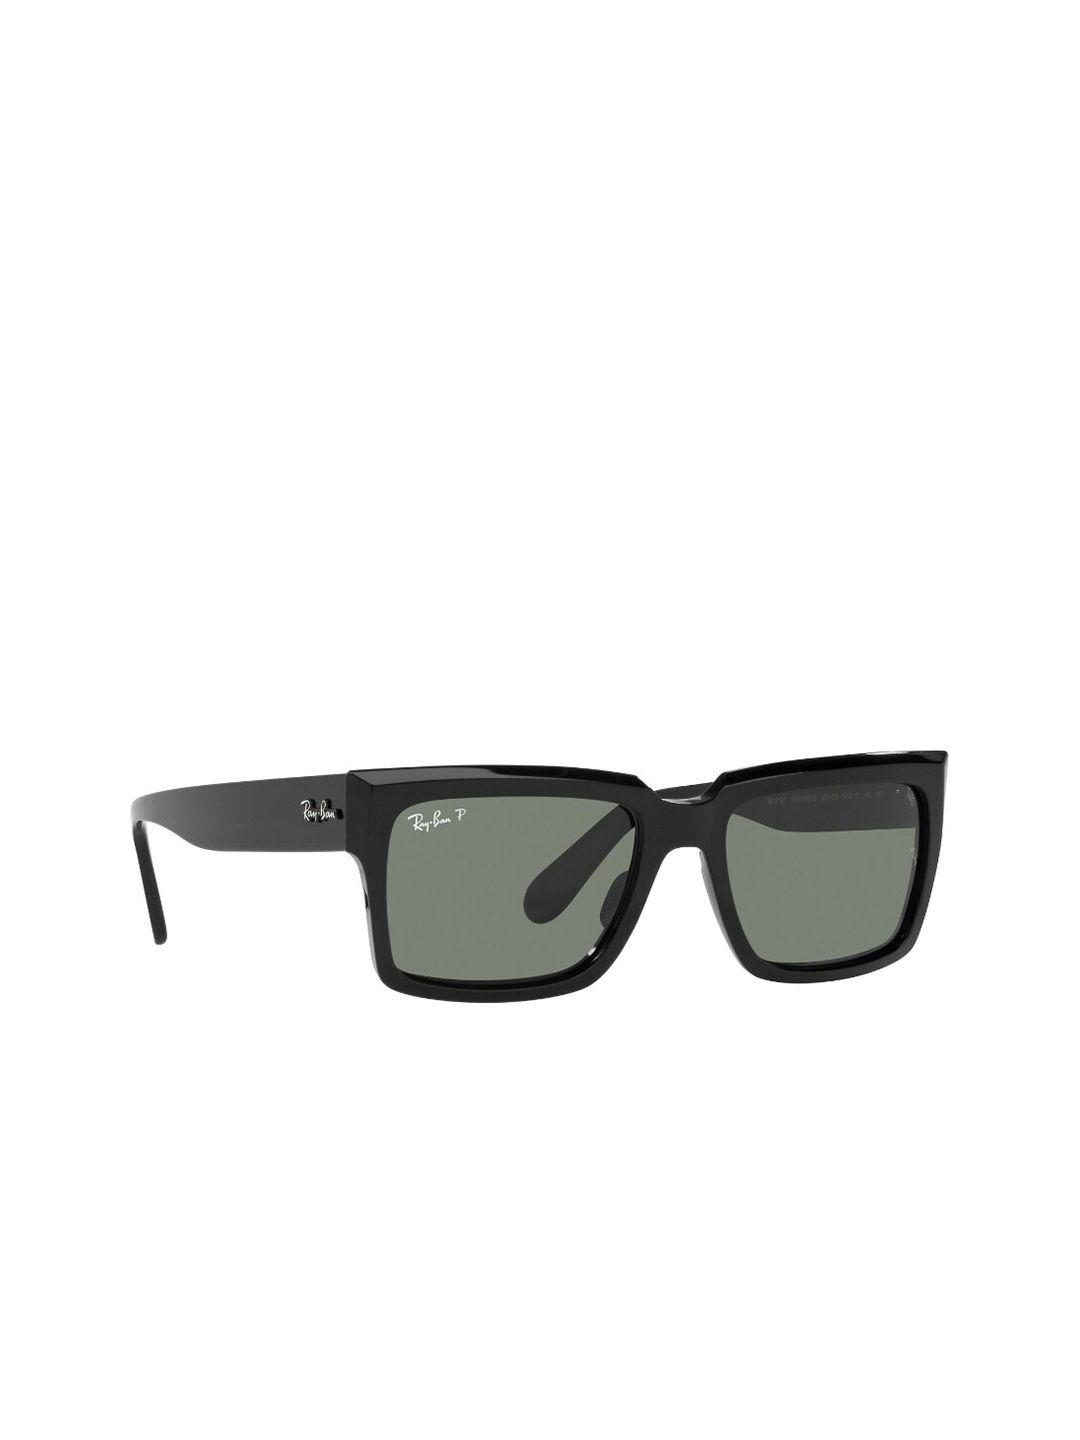 ray-ban unisex green lens & black rectangle sunglasses 8056597435802-green